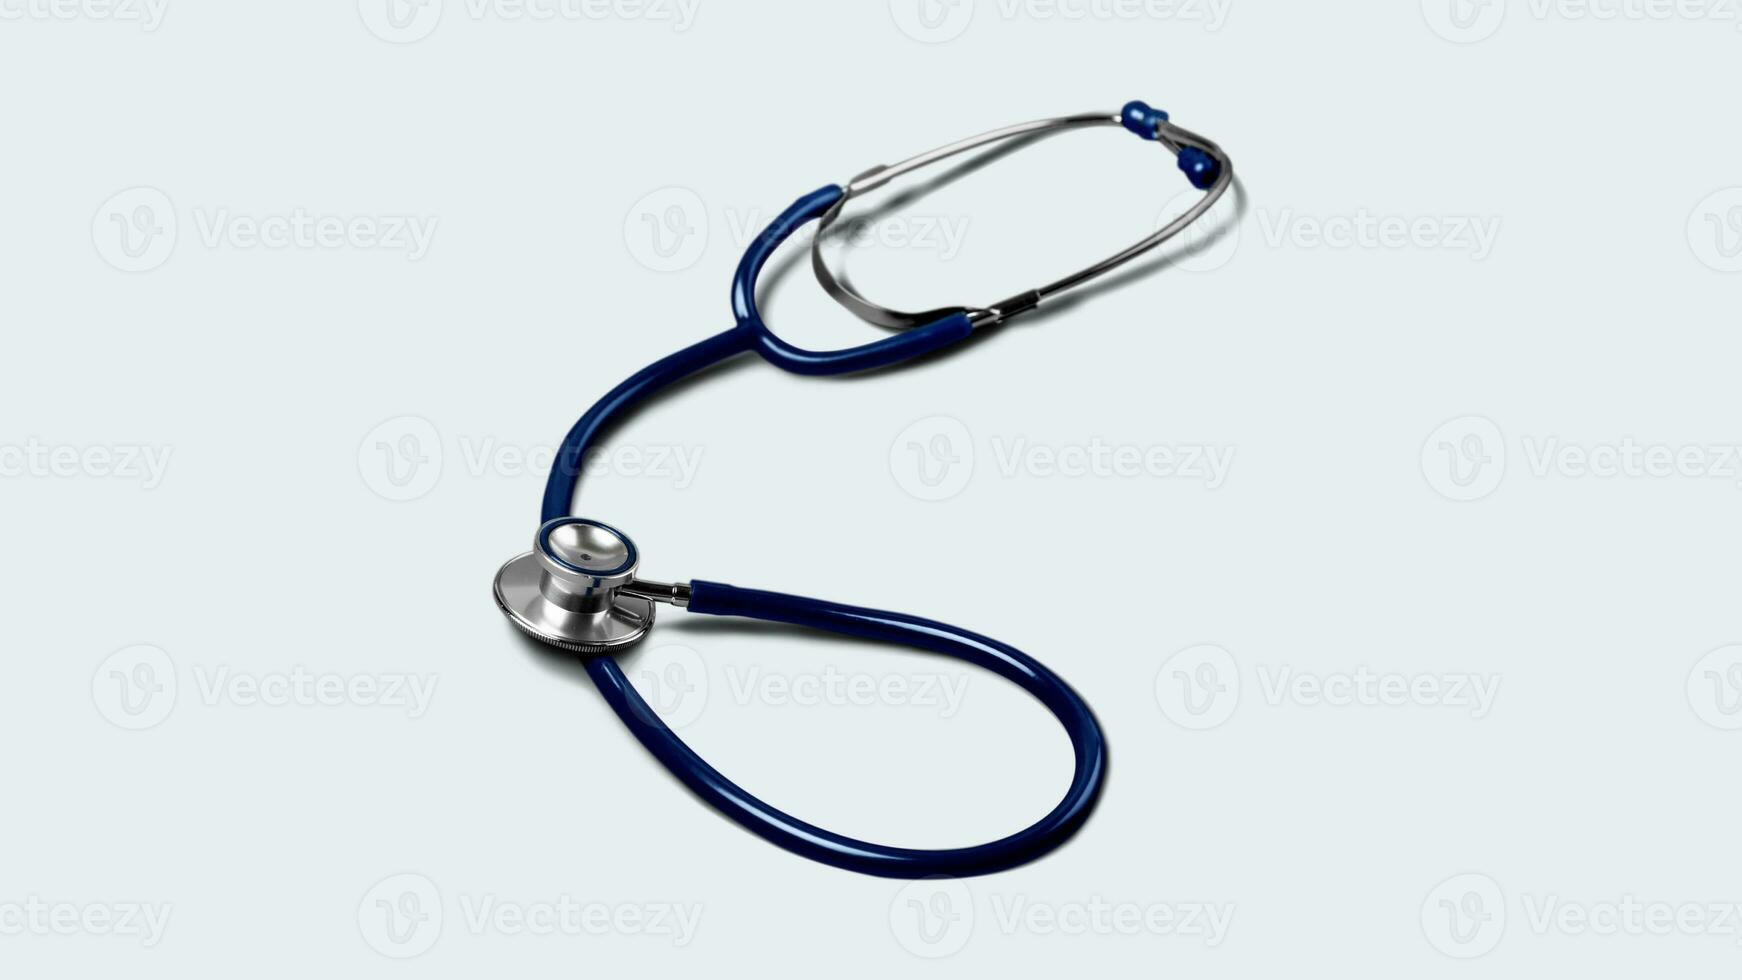 Isolated Stethoscope on White Background, Medical Equipment Concept photo